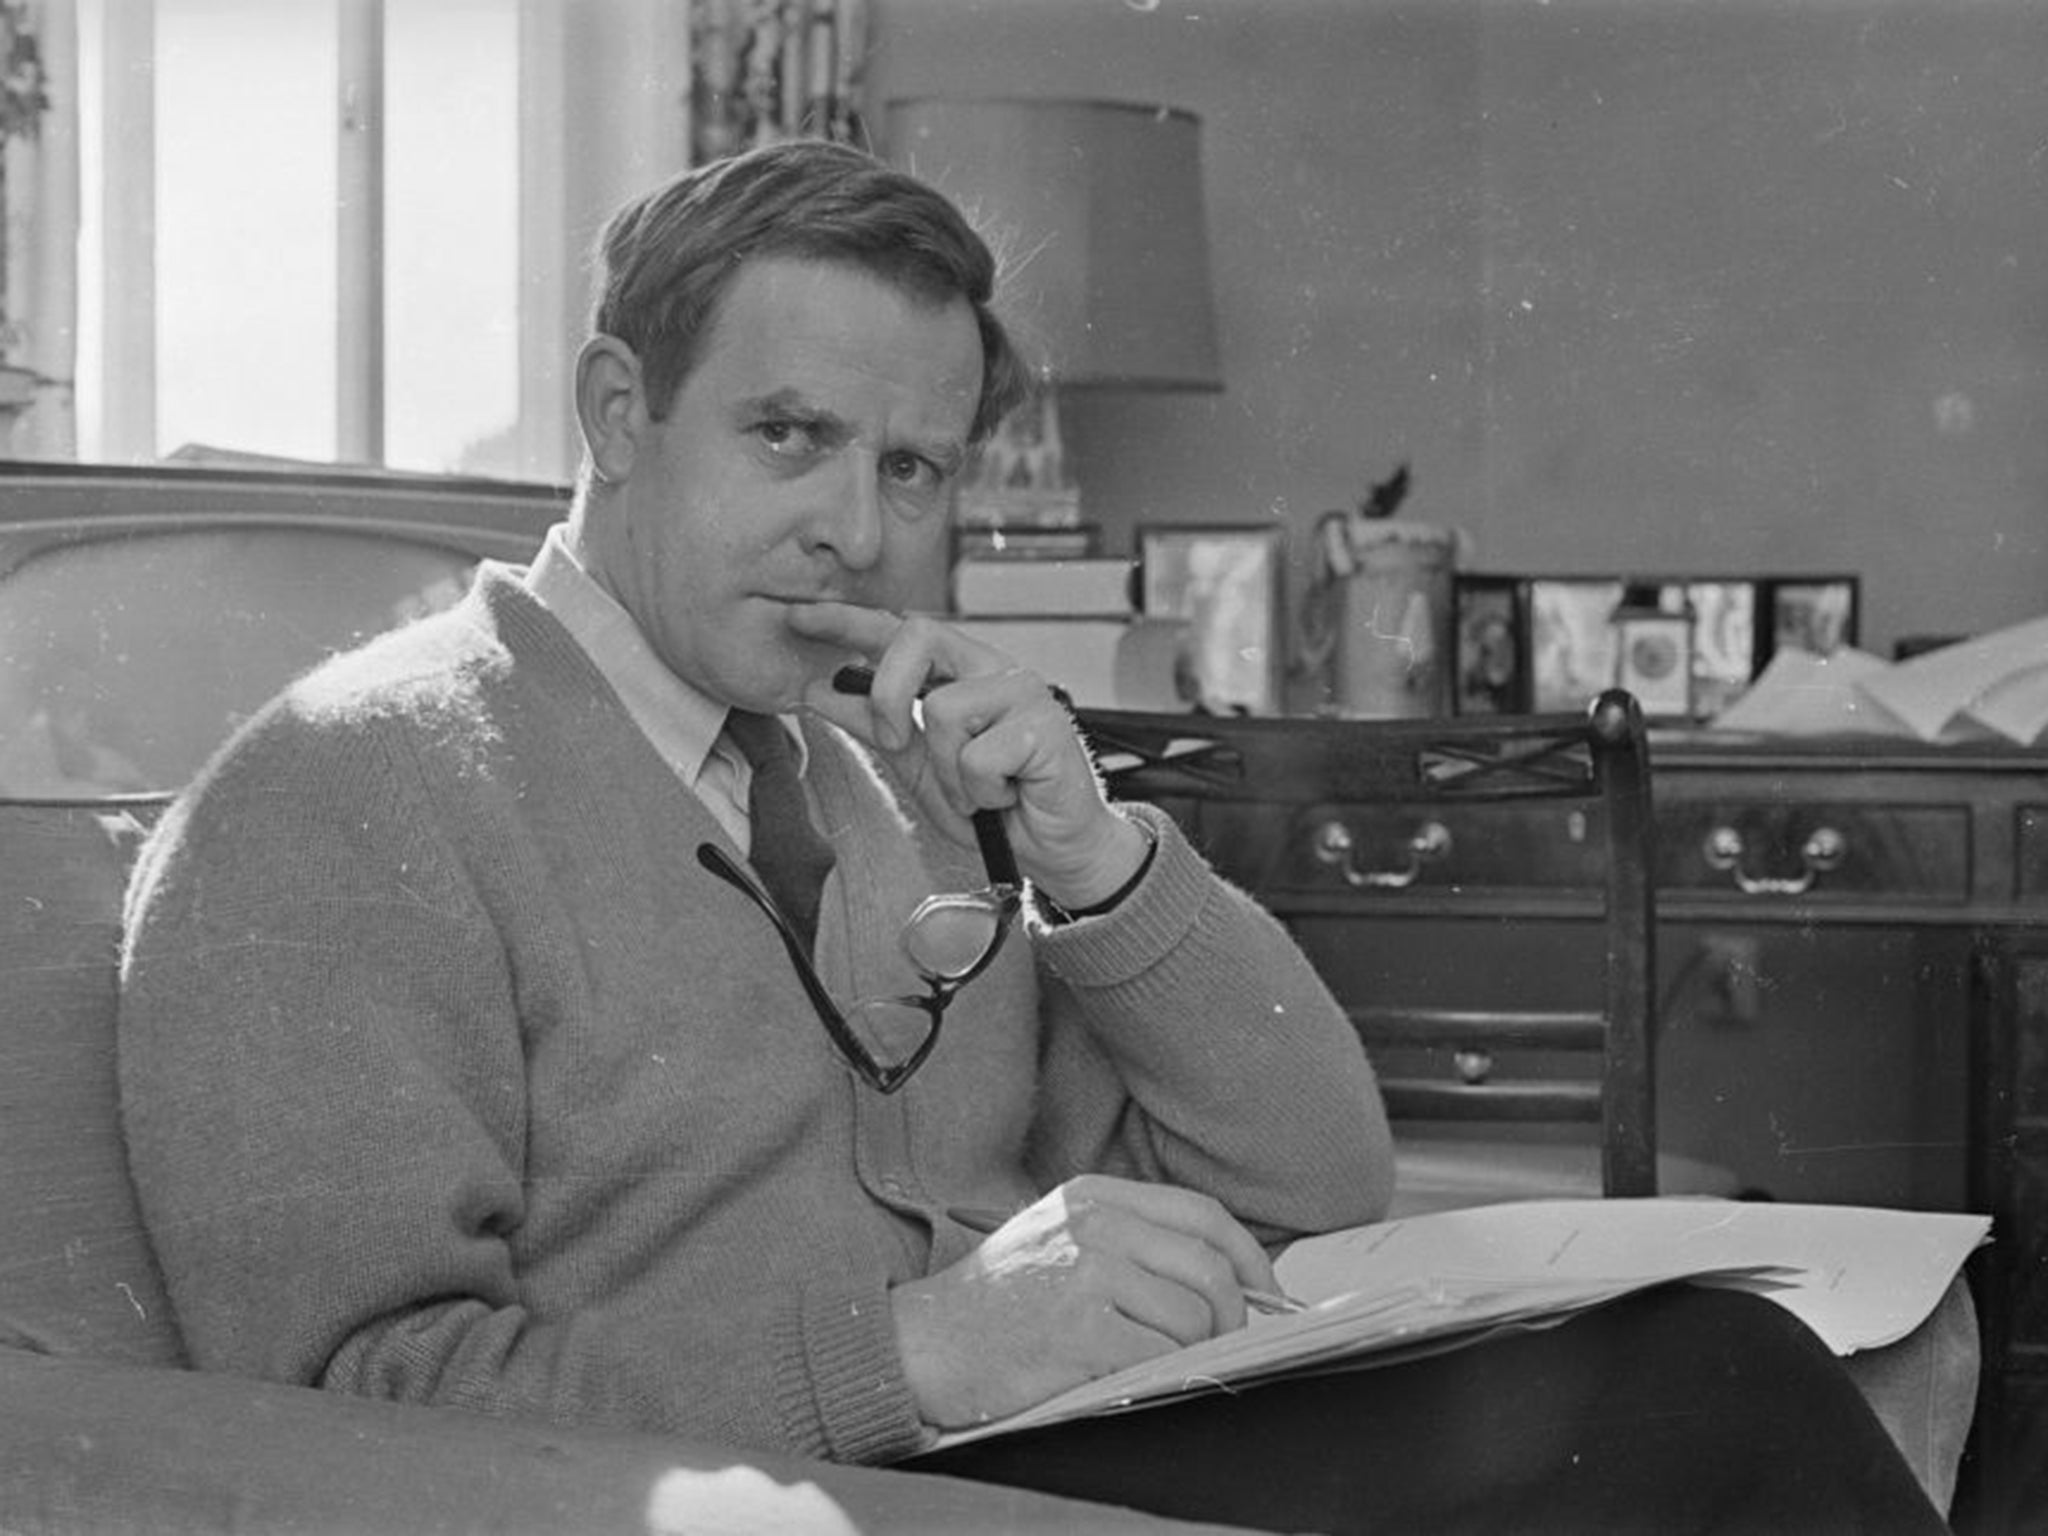 Spy novelist John le Carré pictured in 1965